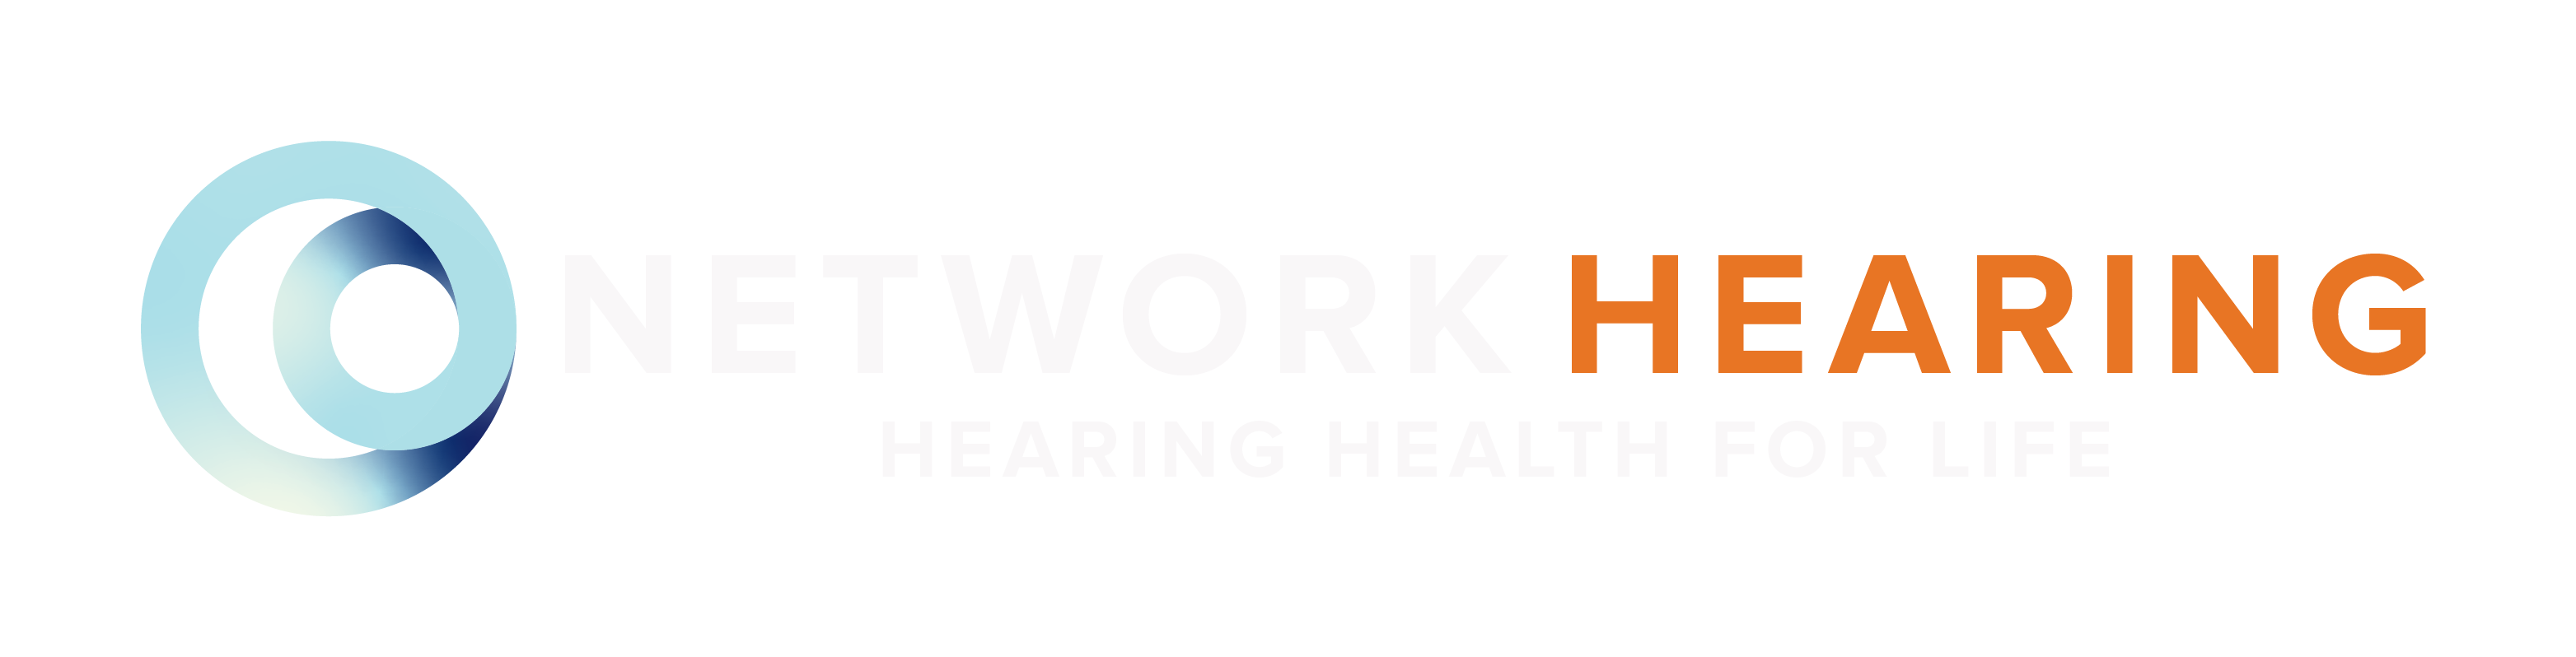 network hearing secondary logo tagline reverse